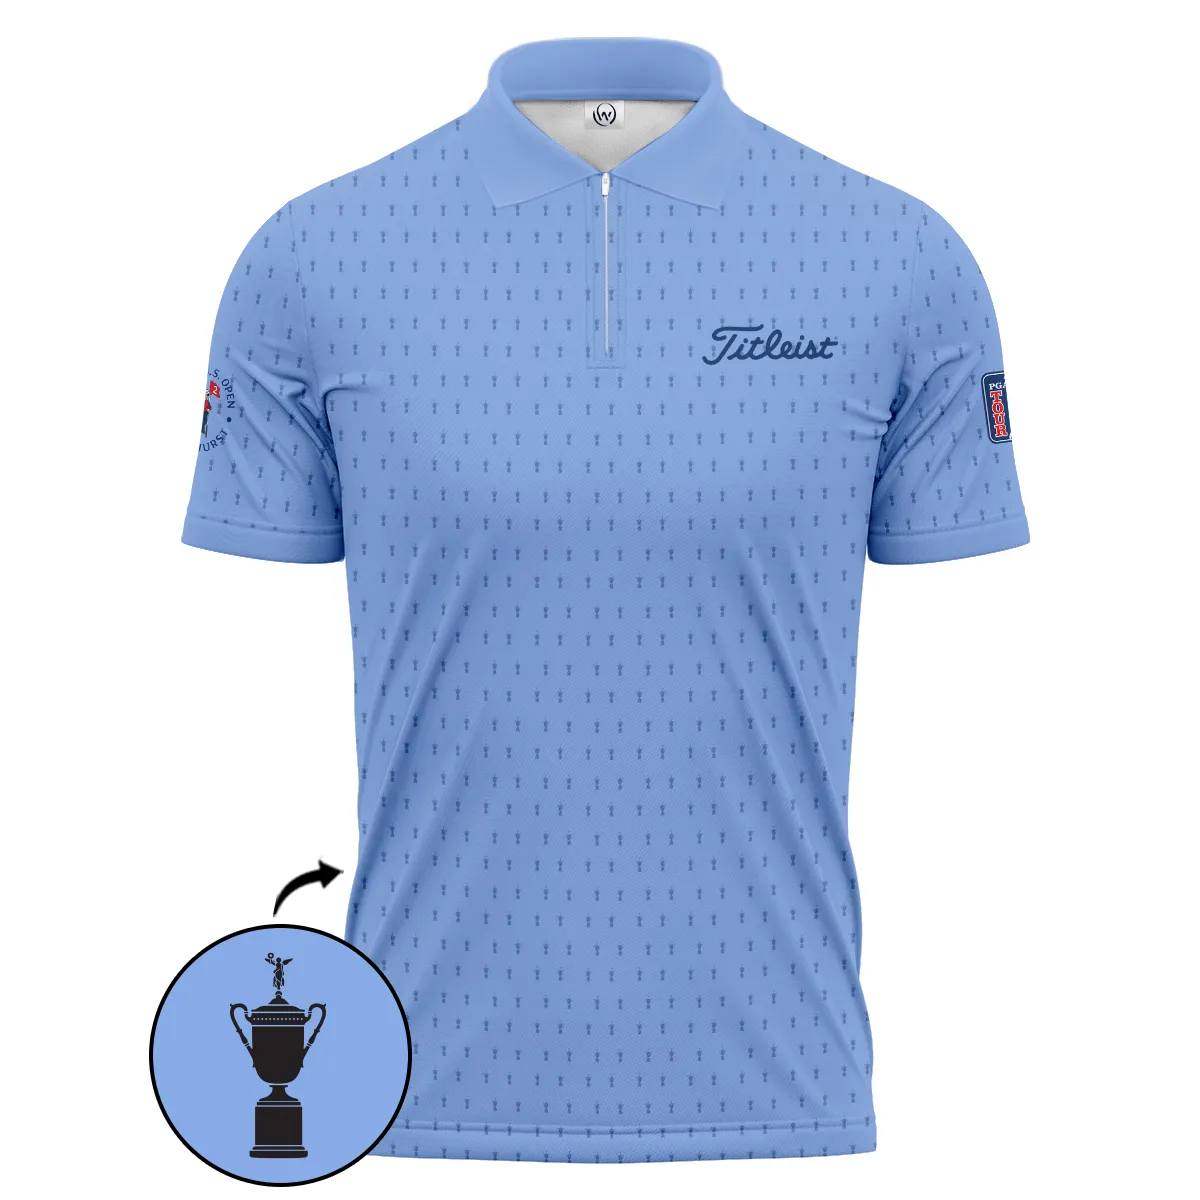 Golf Pattern Cup Blue 124th U.S. Open Pinehurst Pinehurst Titleist Hoodie Shirt Style Classic